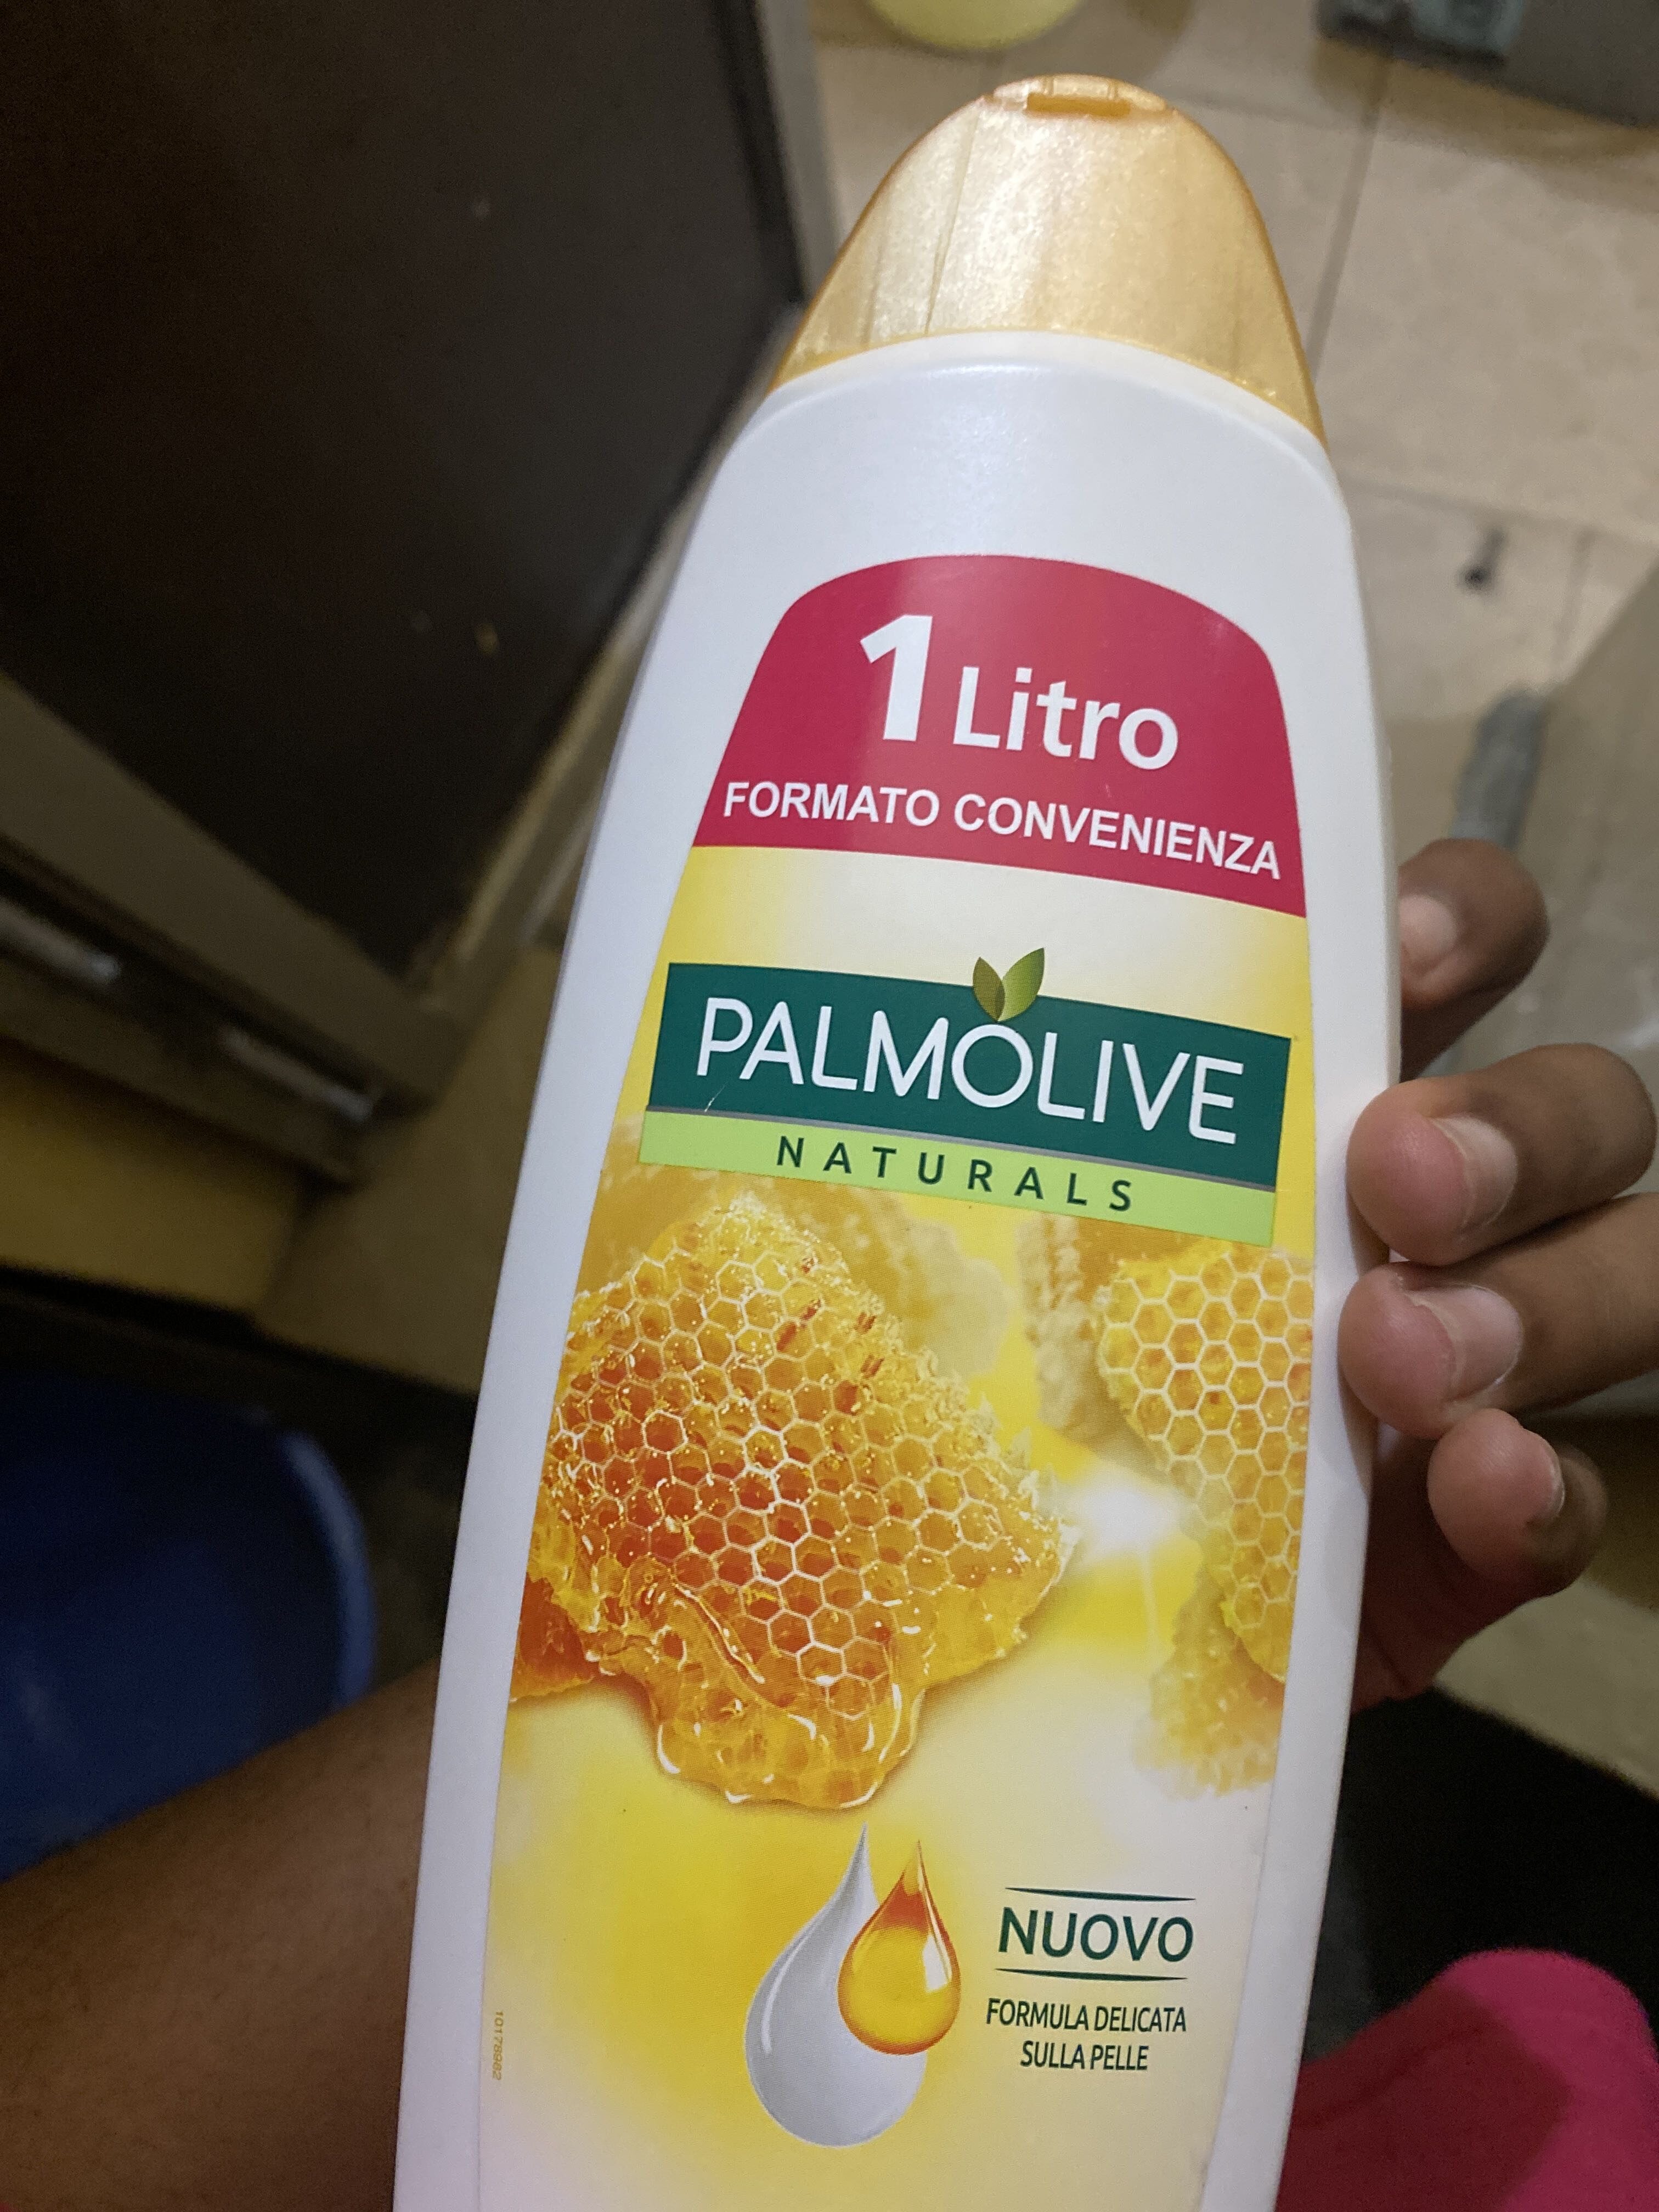 Palm olive - Product - en